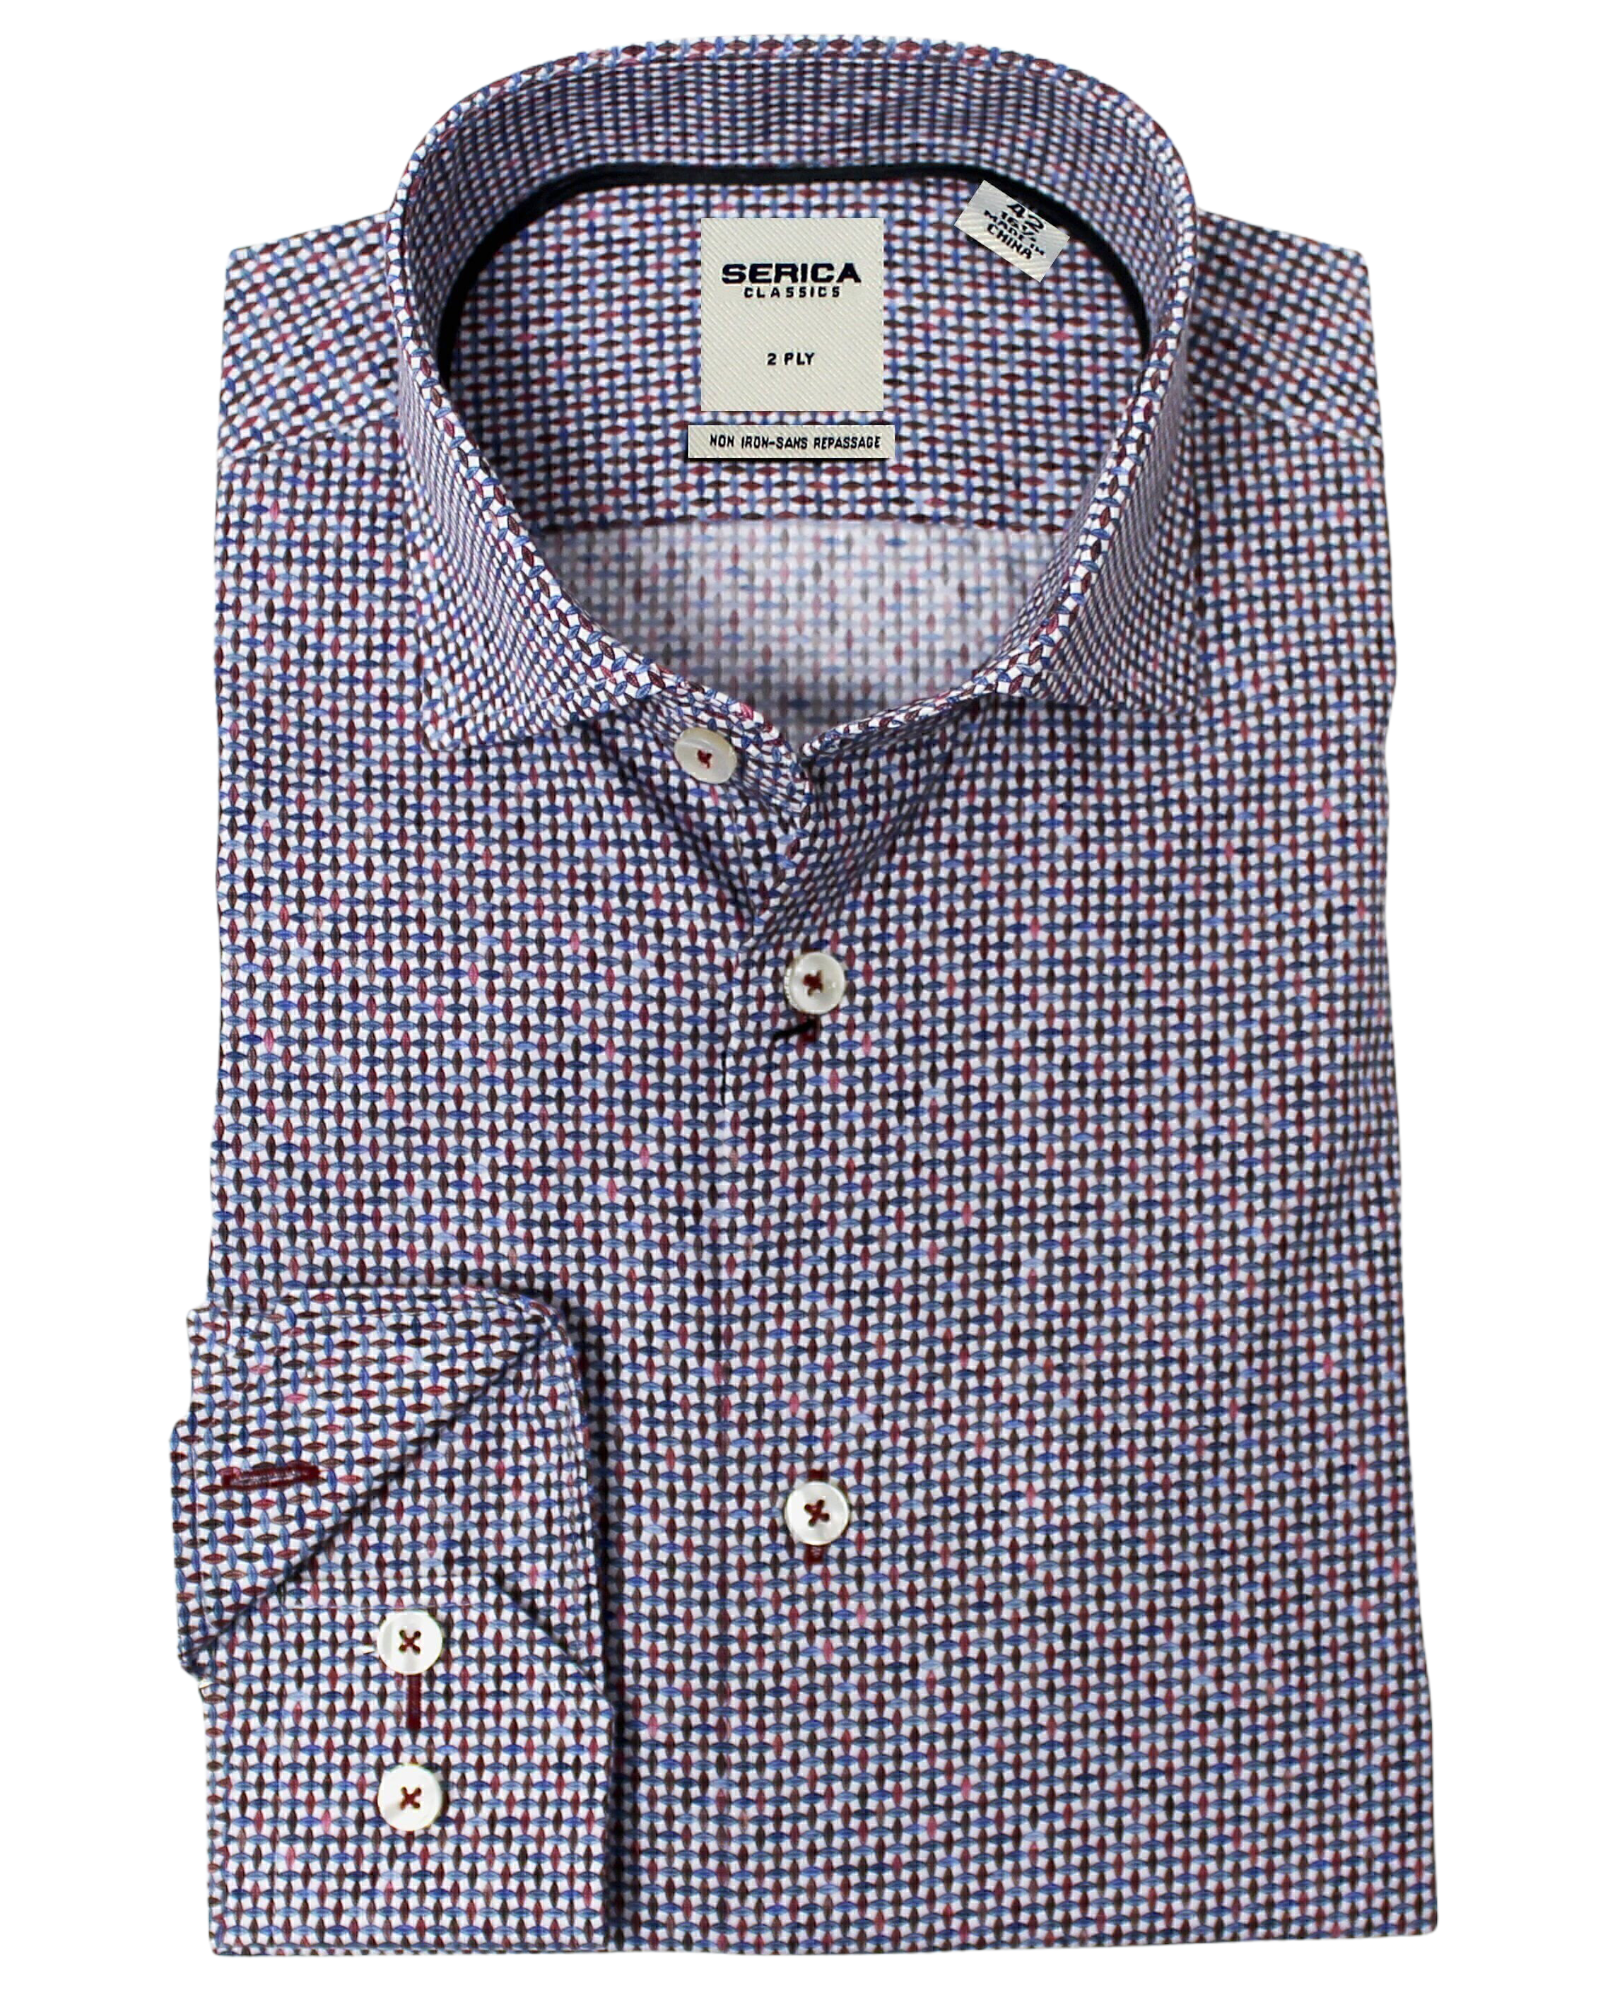 Serica Classic Long Sleeve Dress Shirt (Burgundy Pattern).